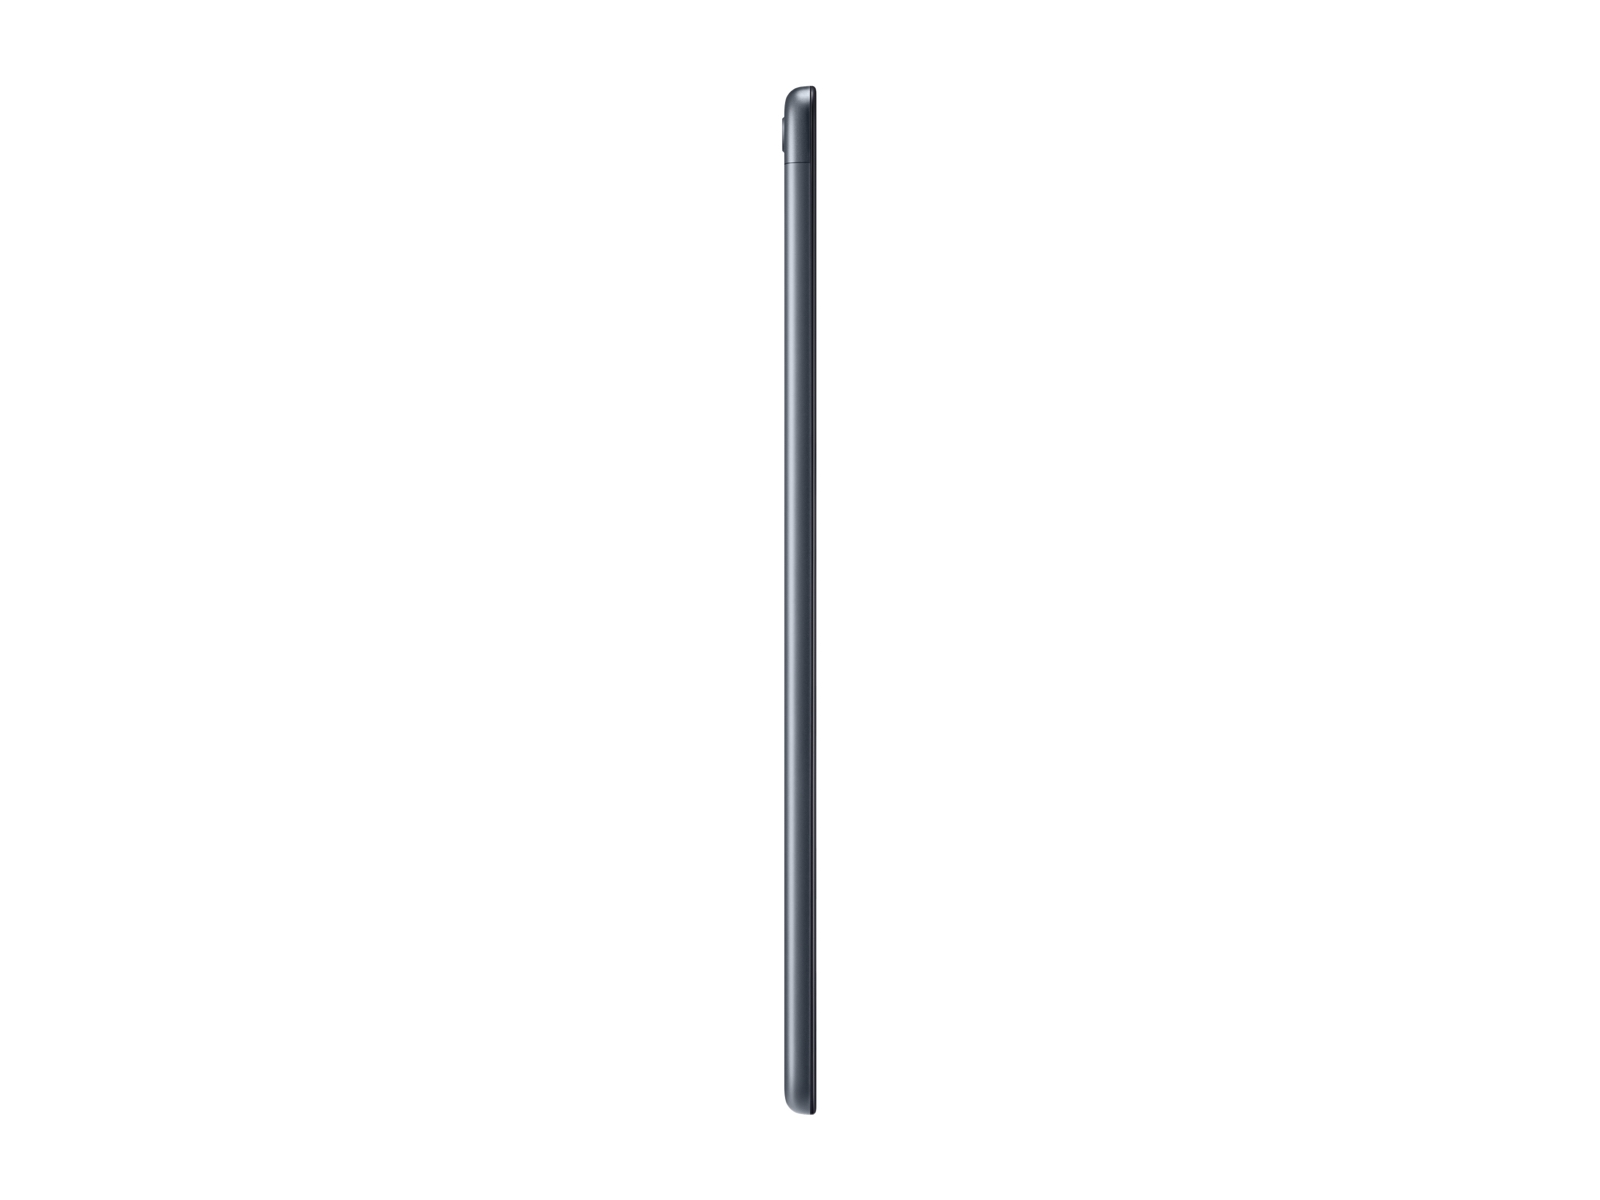 Thumbnail image of Galaxy Tab A 10.1 (2019), 32GB, Black (Wi-Fi)